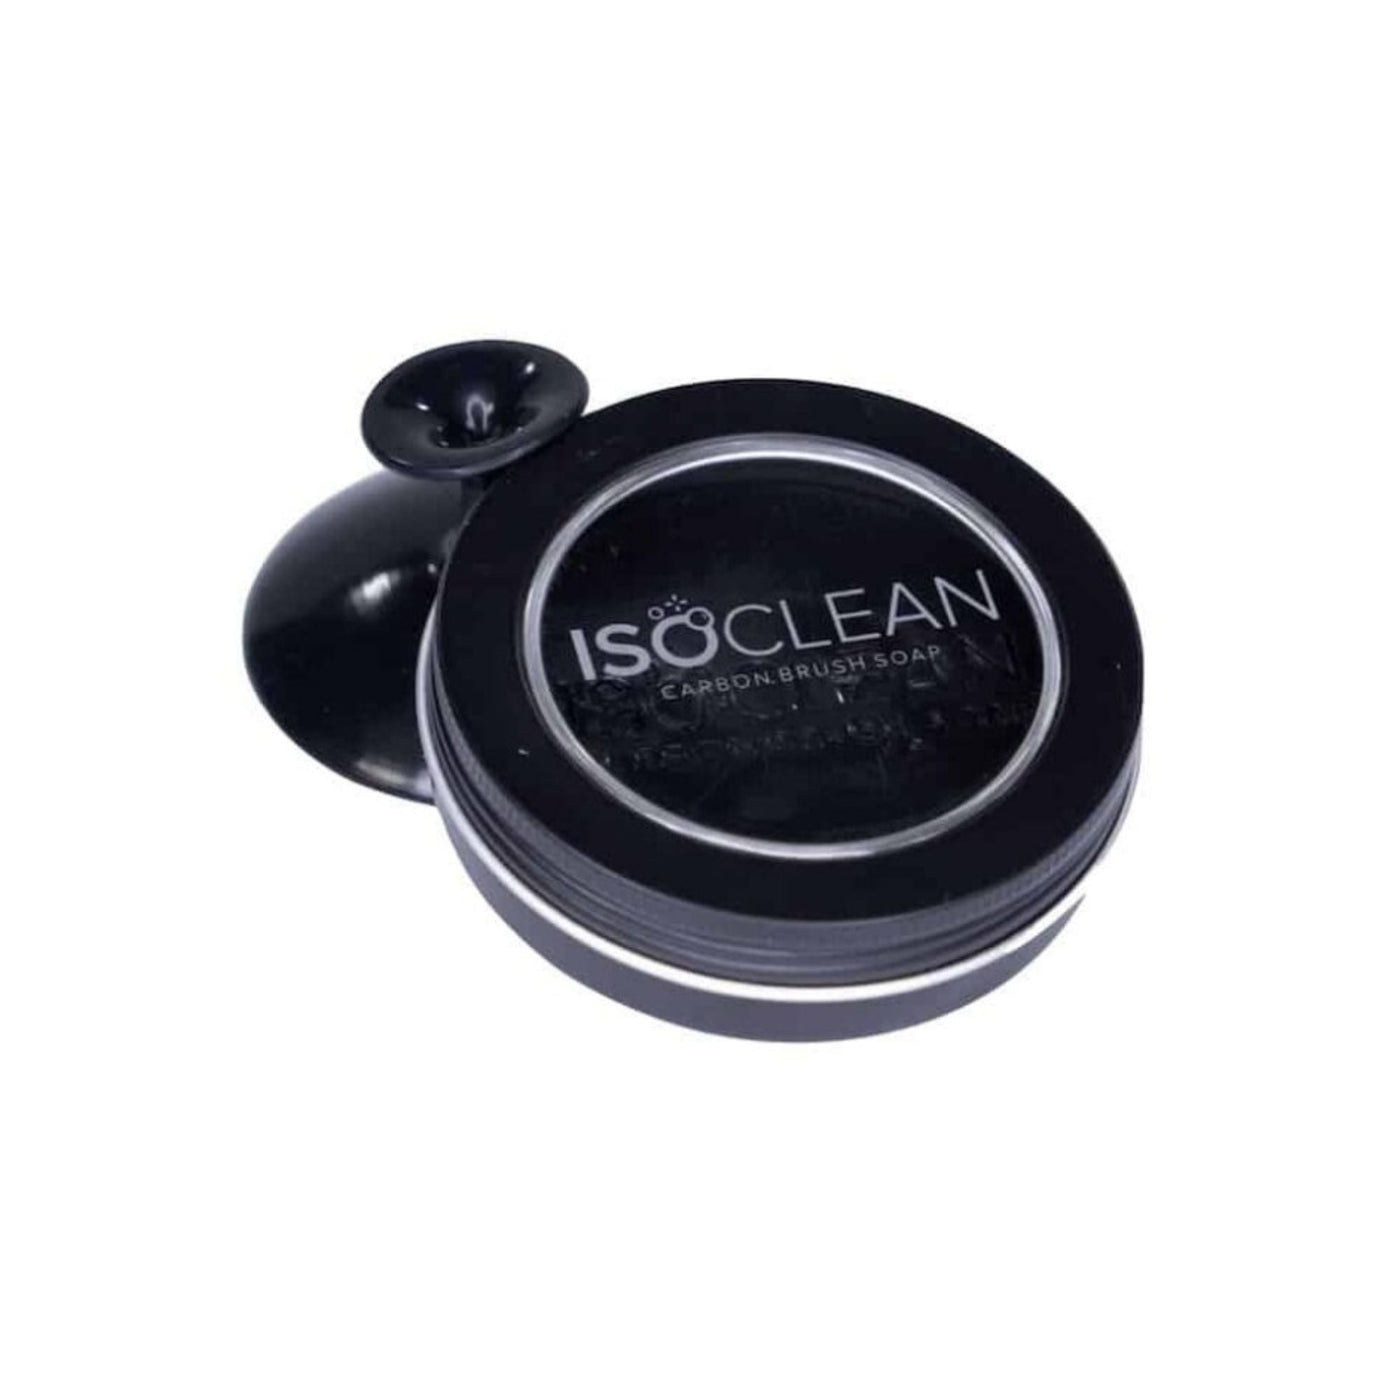 ISOCLEAN - Carbon Brush Soap